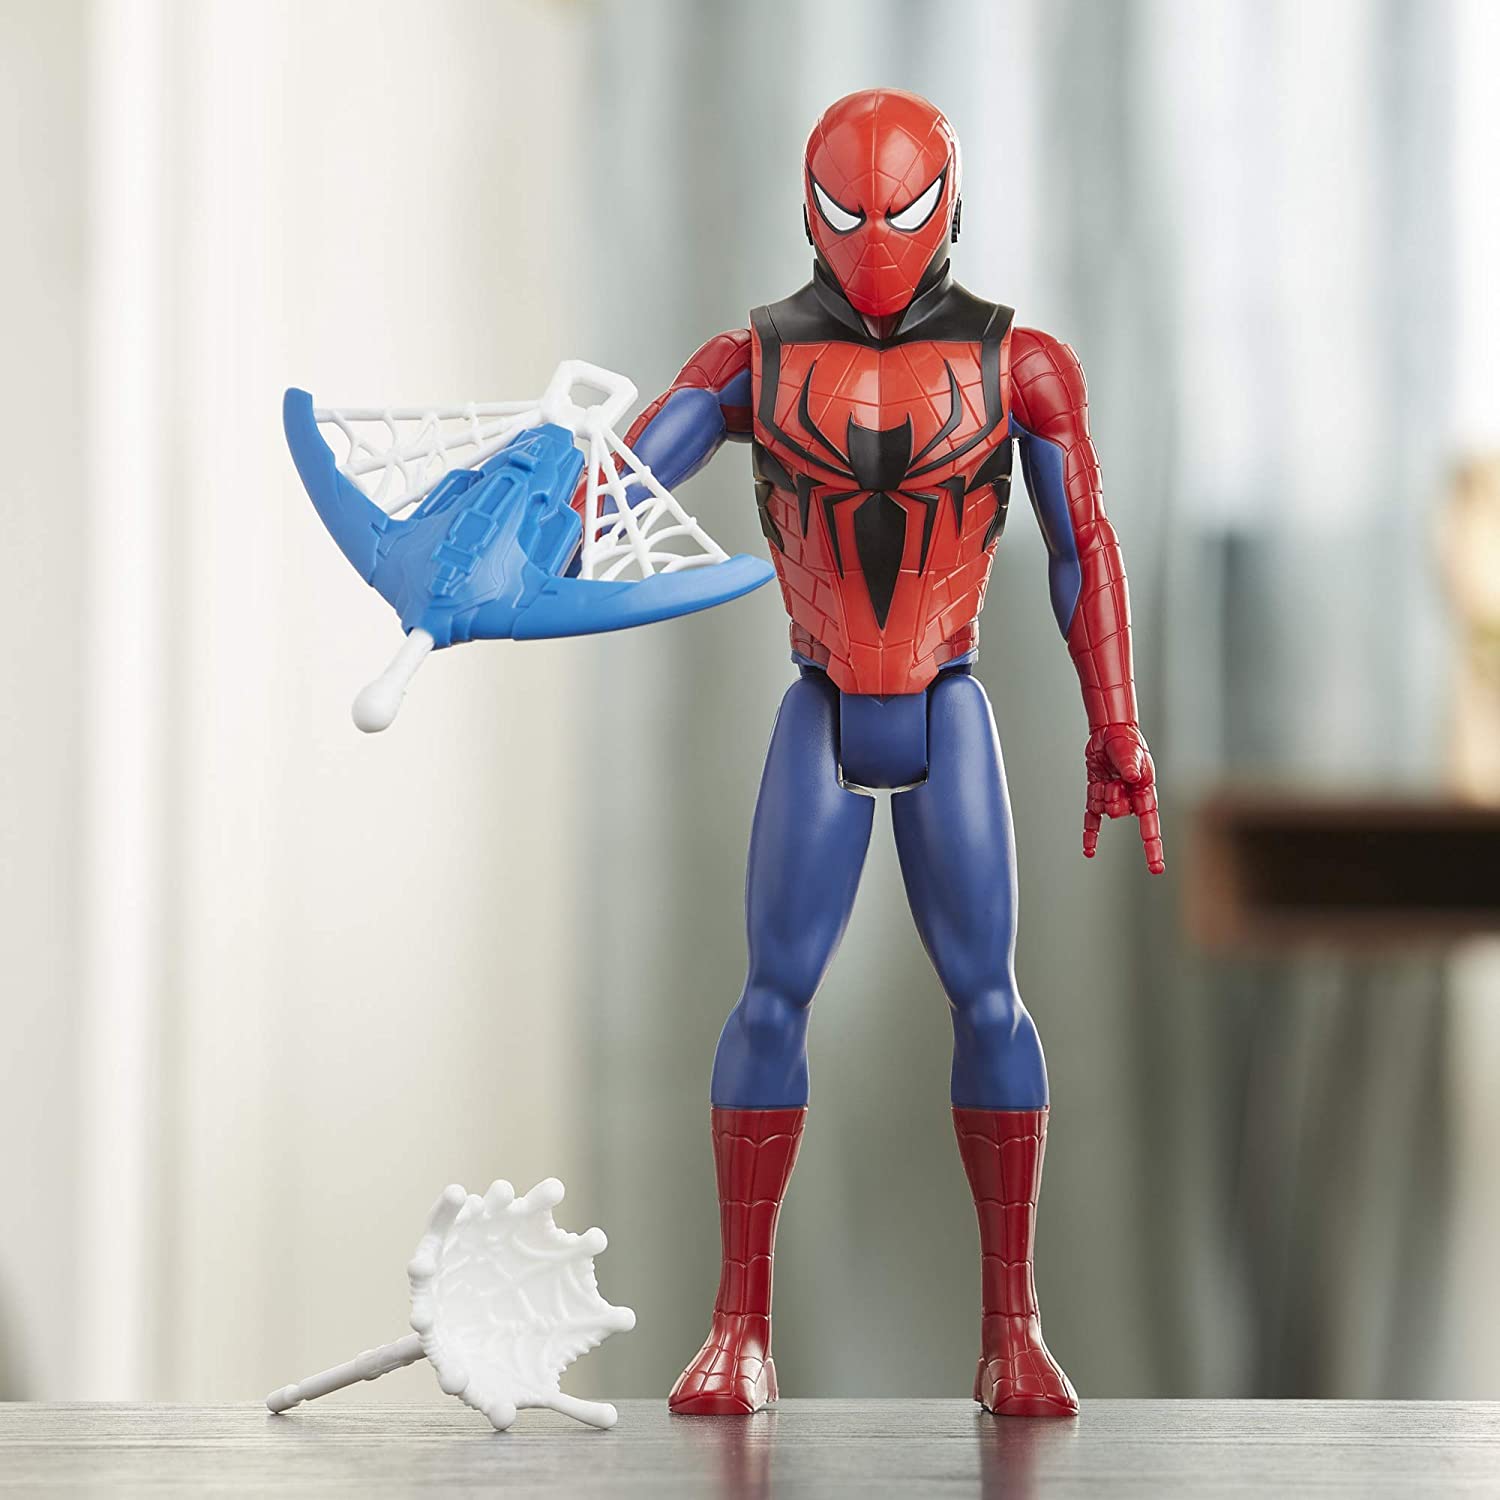 Spider-Man No Way Home Titan Hero Series Armored 12 Action Figure - Hasbro